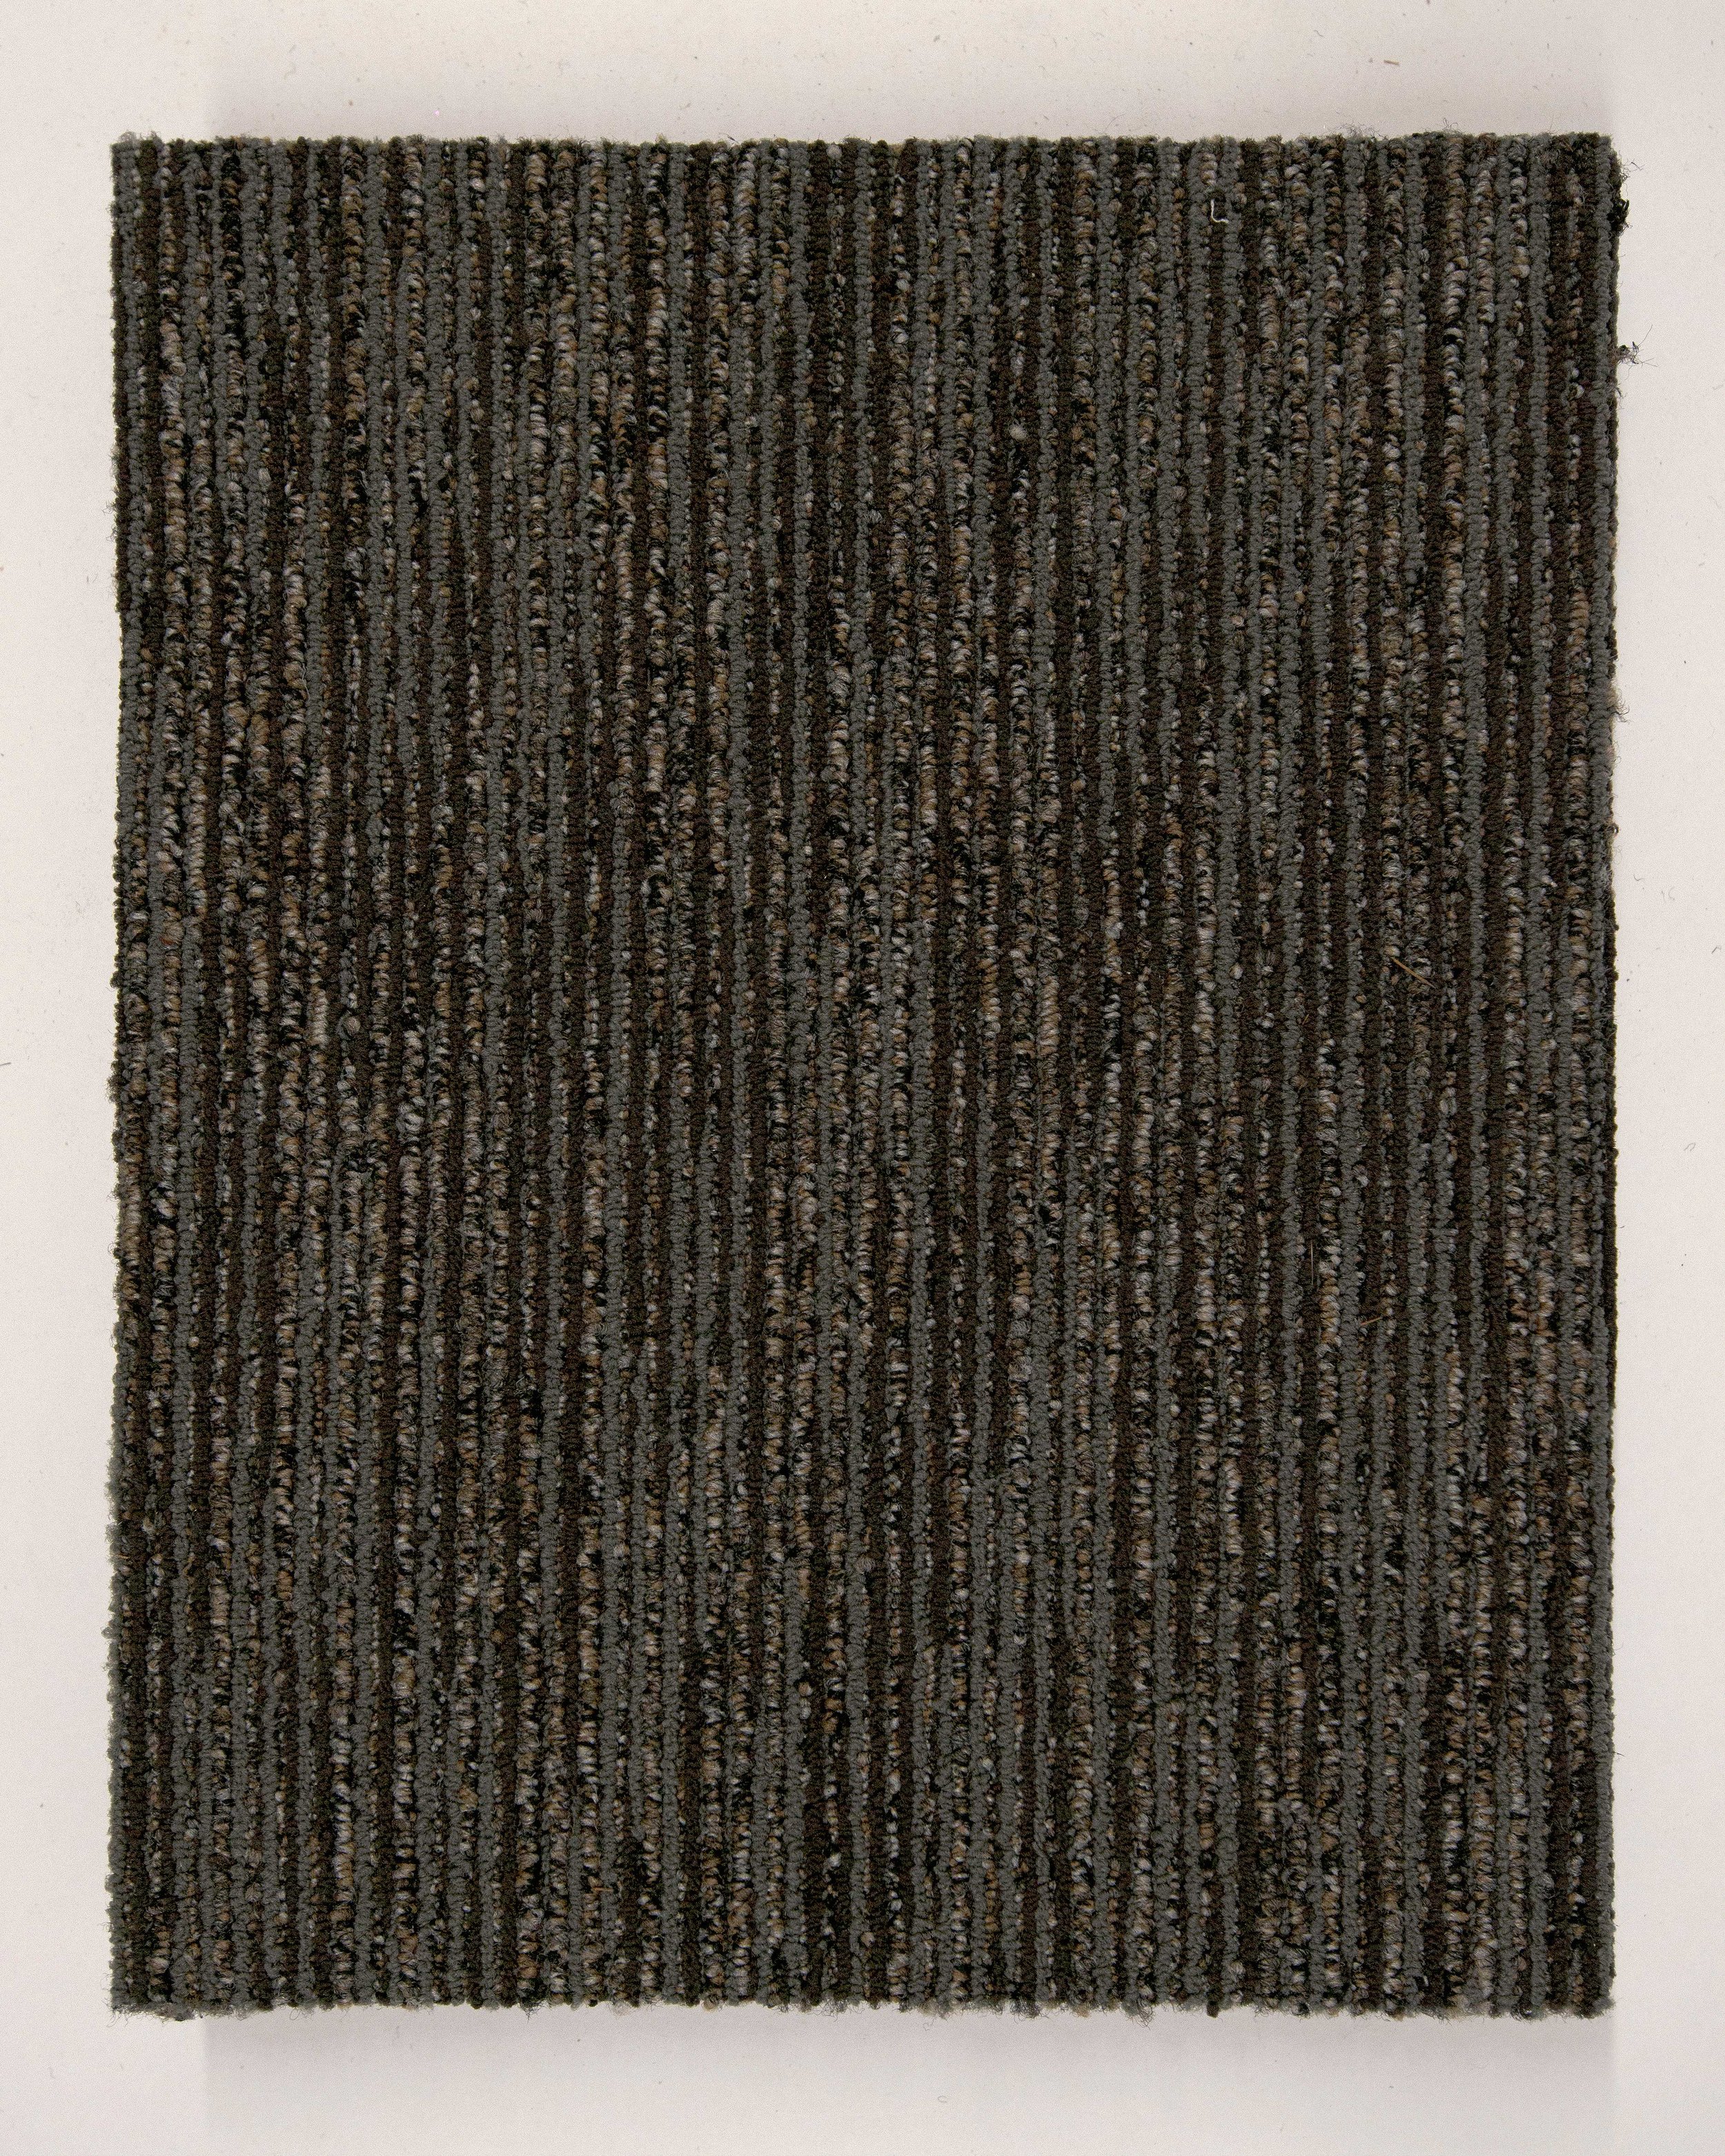  2016 carpet on cradled wood panel 14" x 11" 